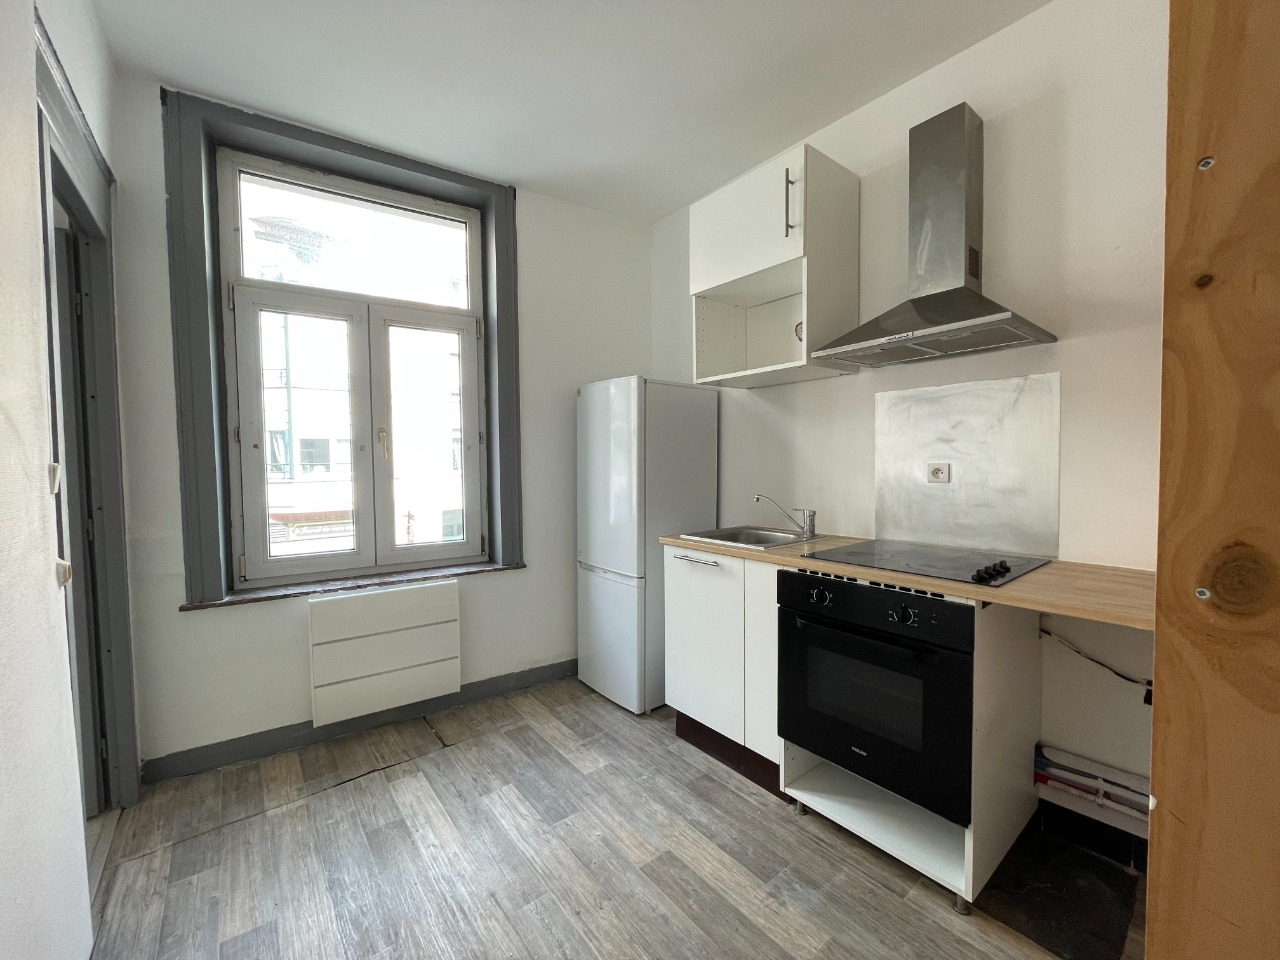 Vente appartement 59000 Lille - Appartement type 3 54m2 Vieux-Lille